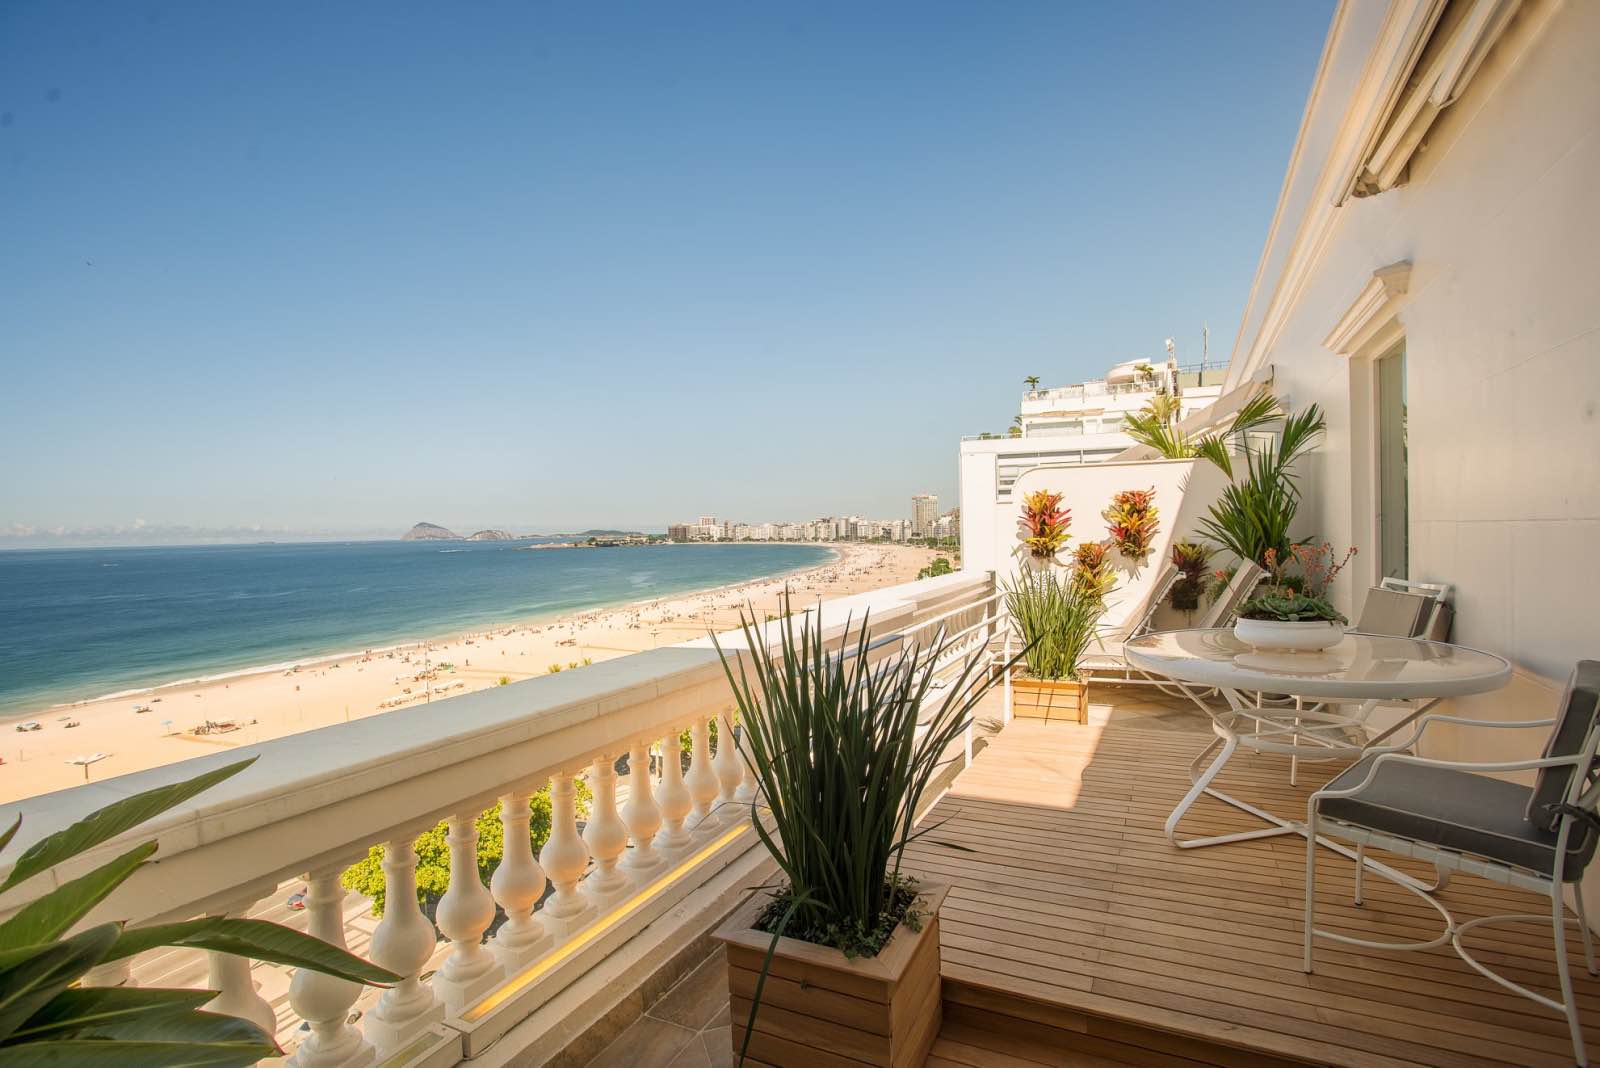 Belmond Copacabana Palace view of ocean